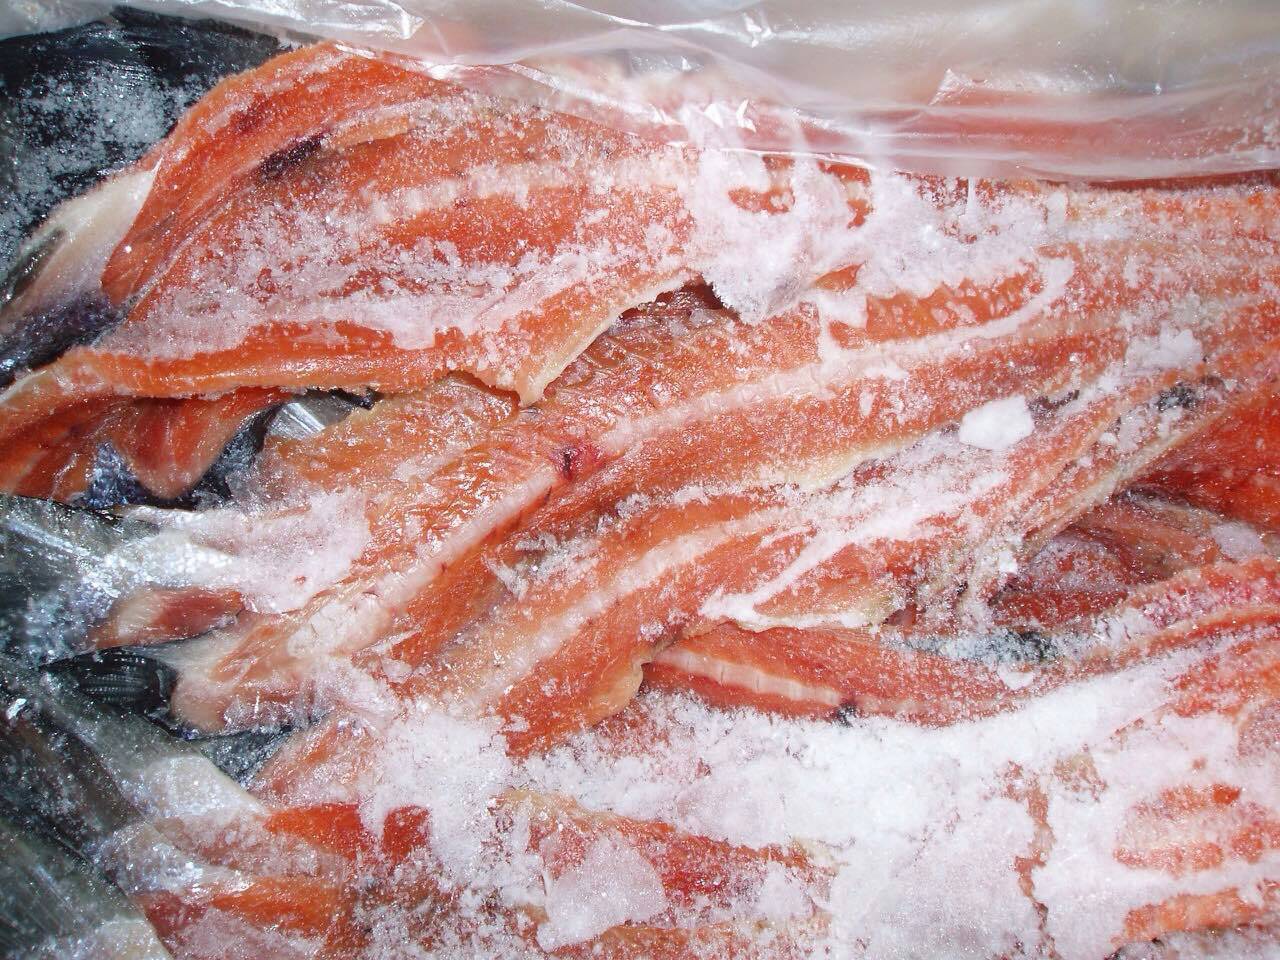 Морожено соленая рыба. Перемороженная красная рыба. Лосось заморозка. Сёмга свежемороженая. Замороженная красная рыба.